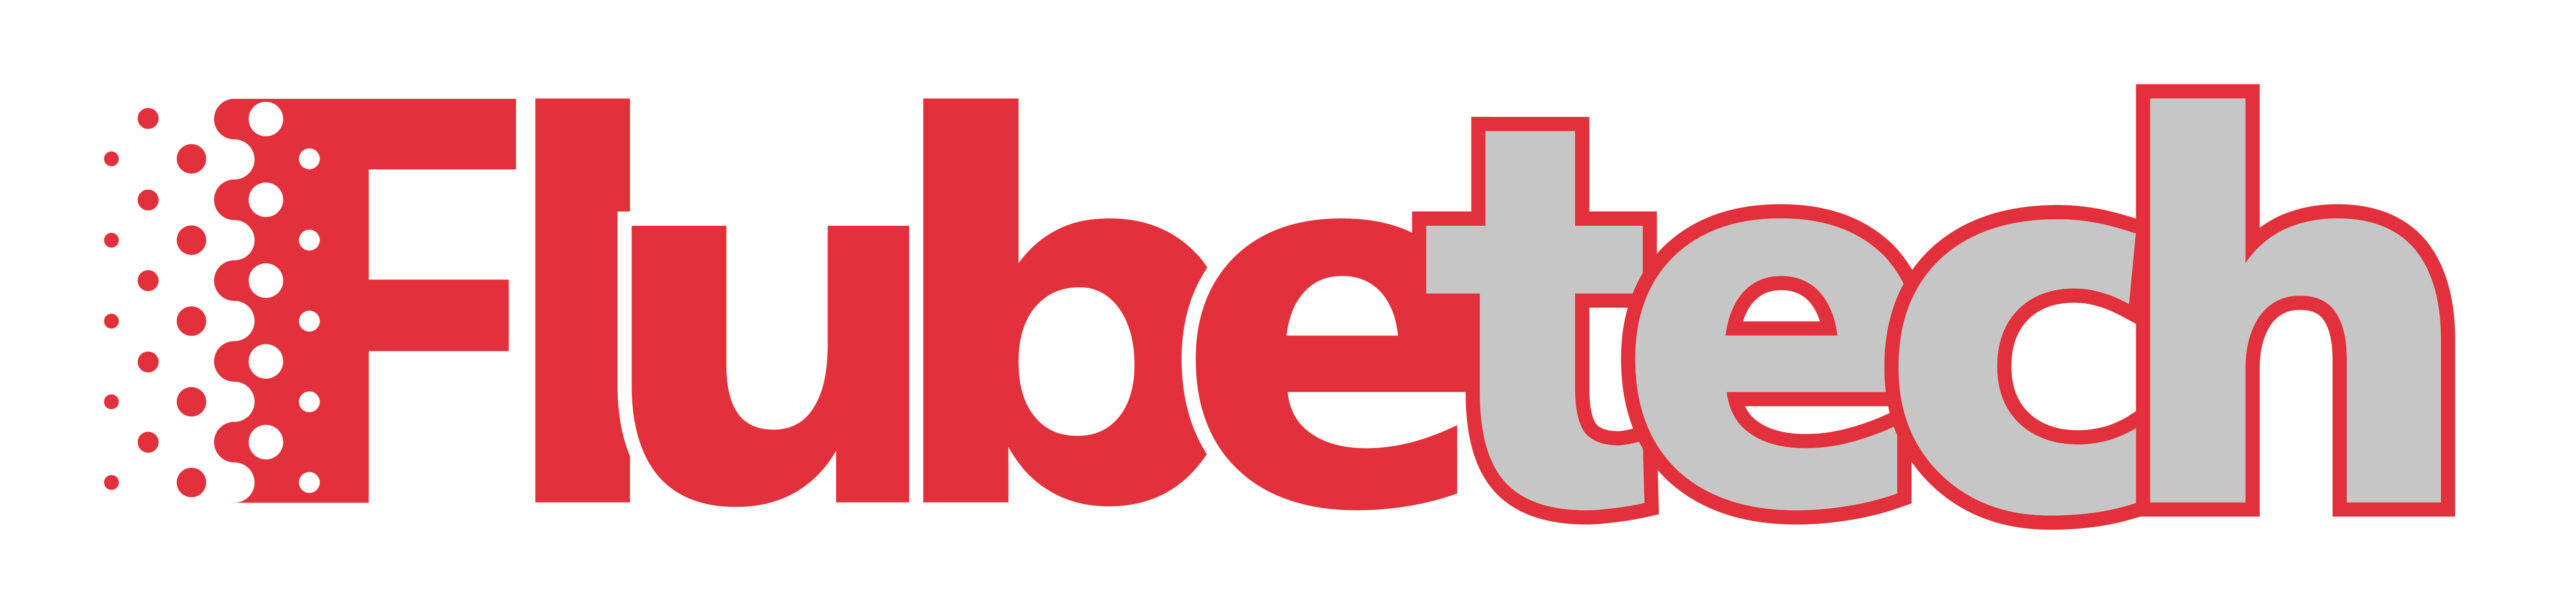 22 - Flubetech logo